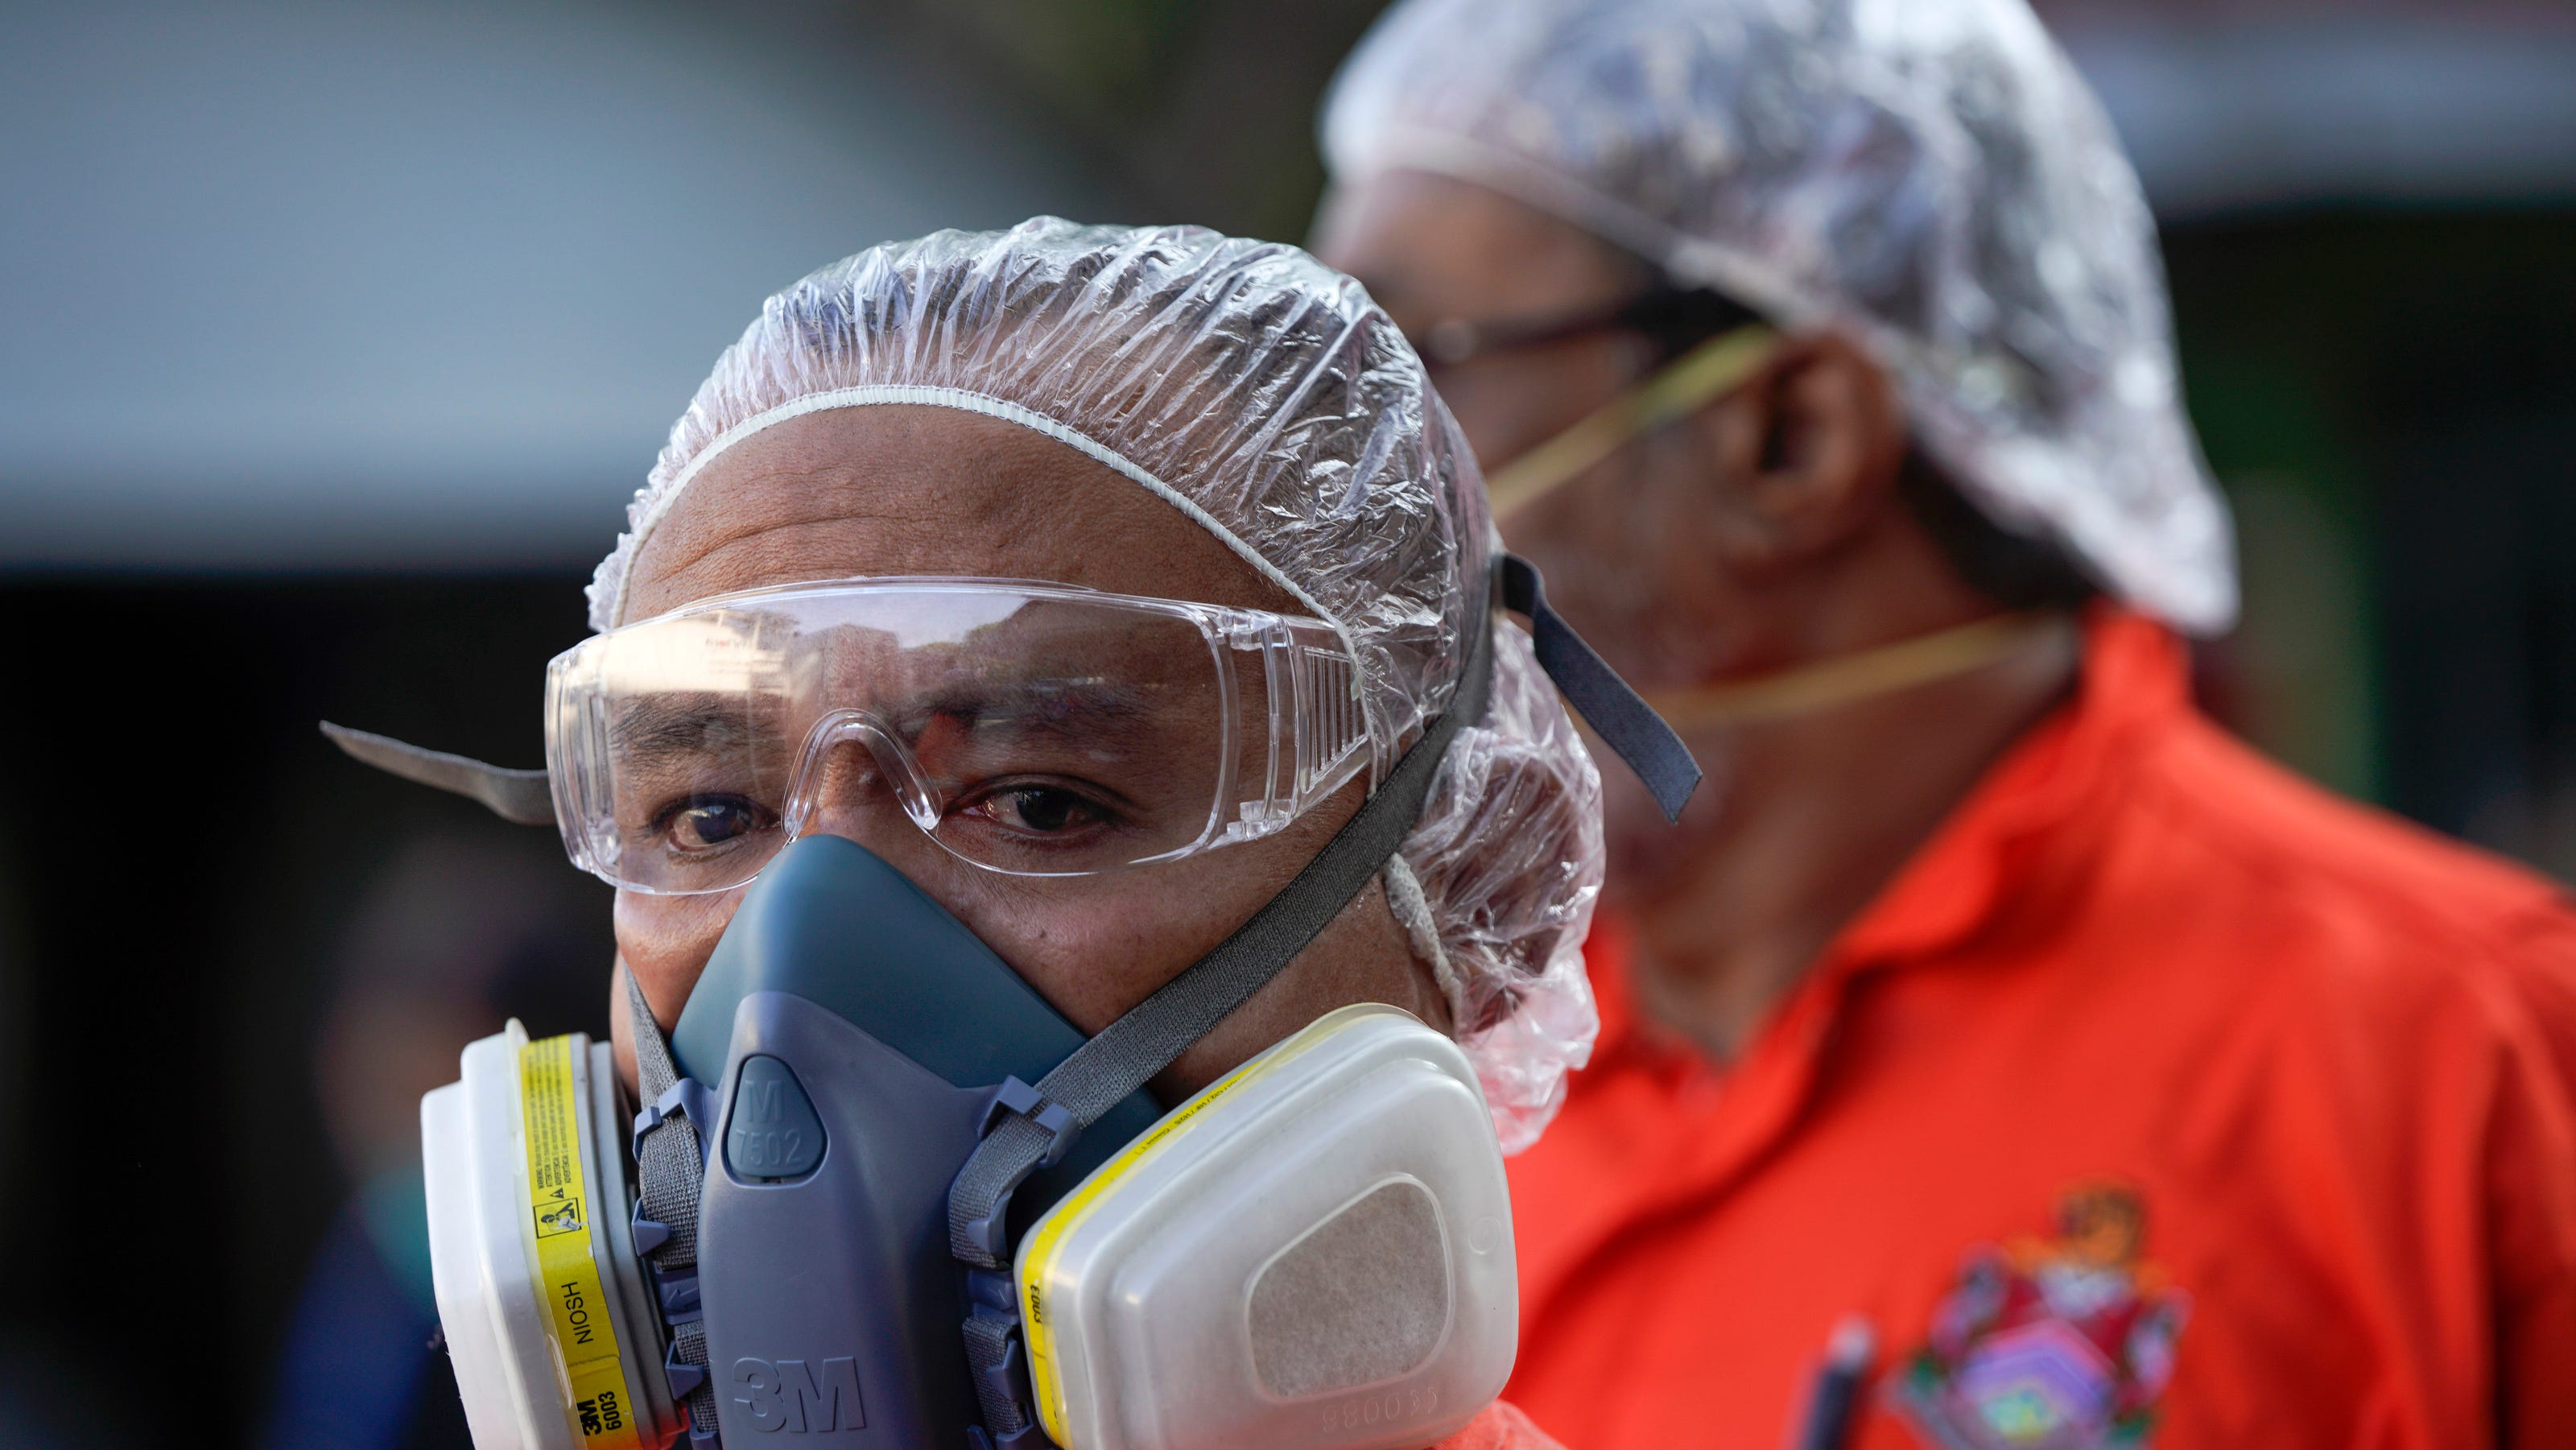 Coronavirus: U.S. stocked N95 face masks instead of reusable respirators